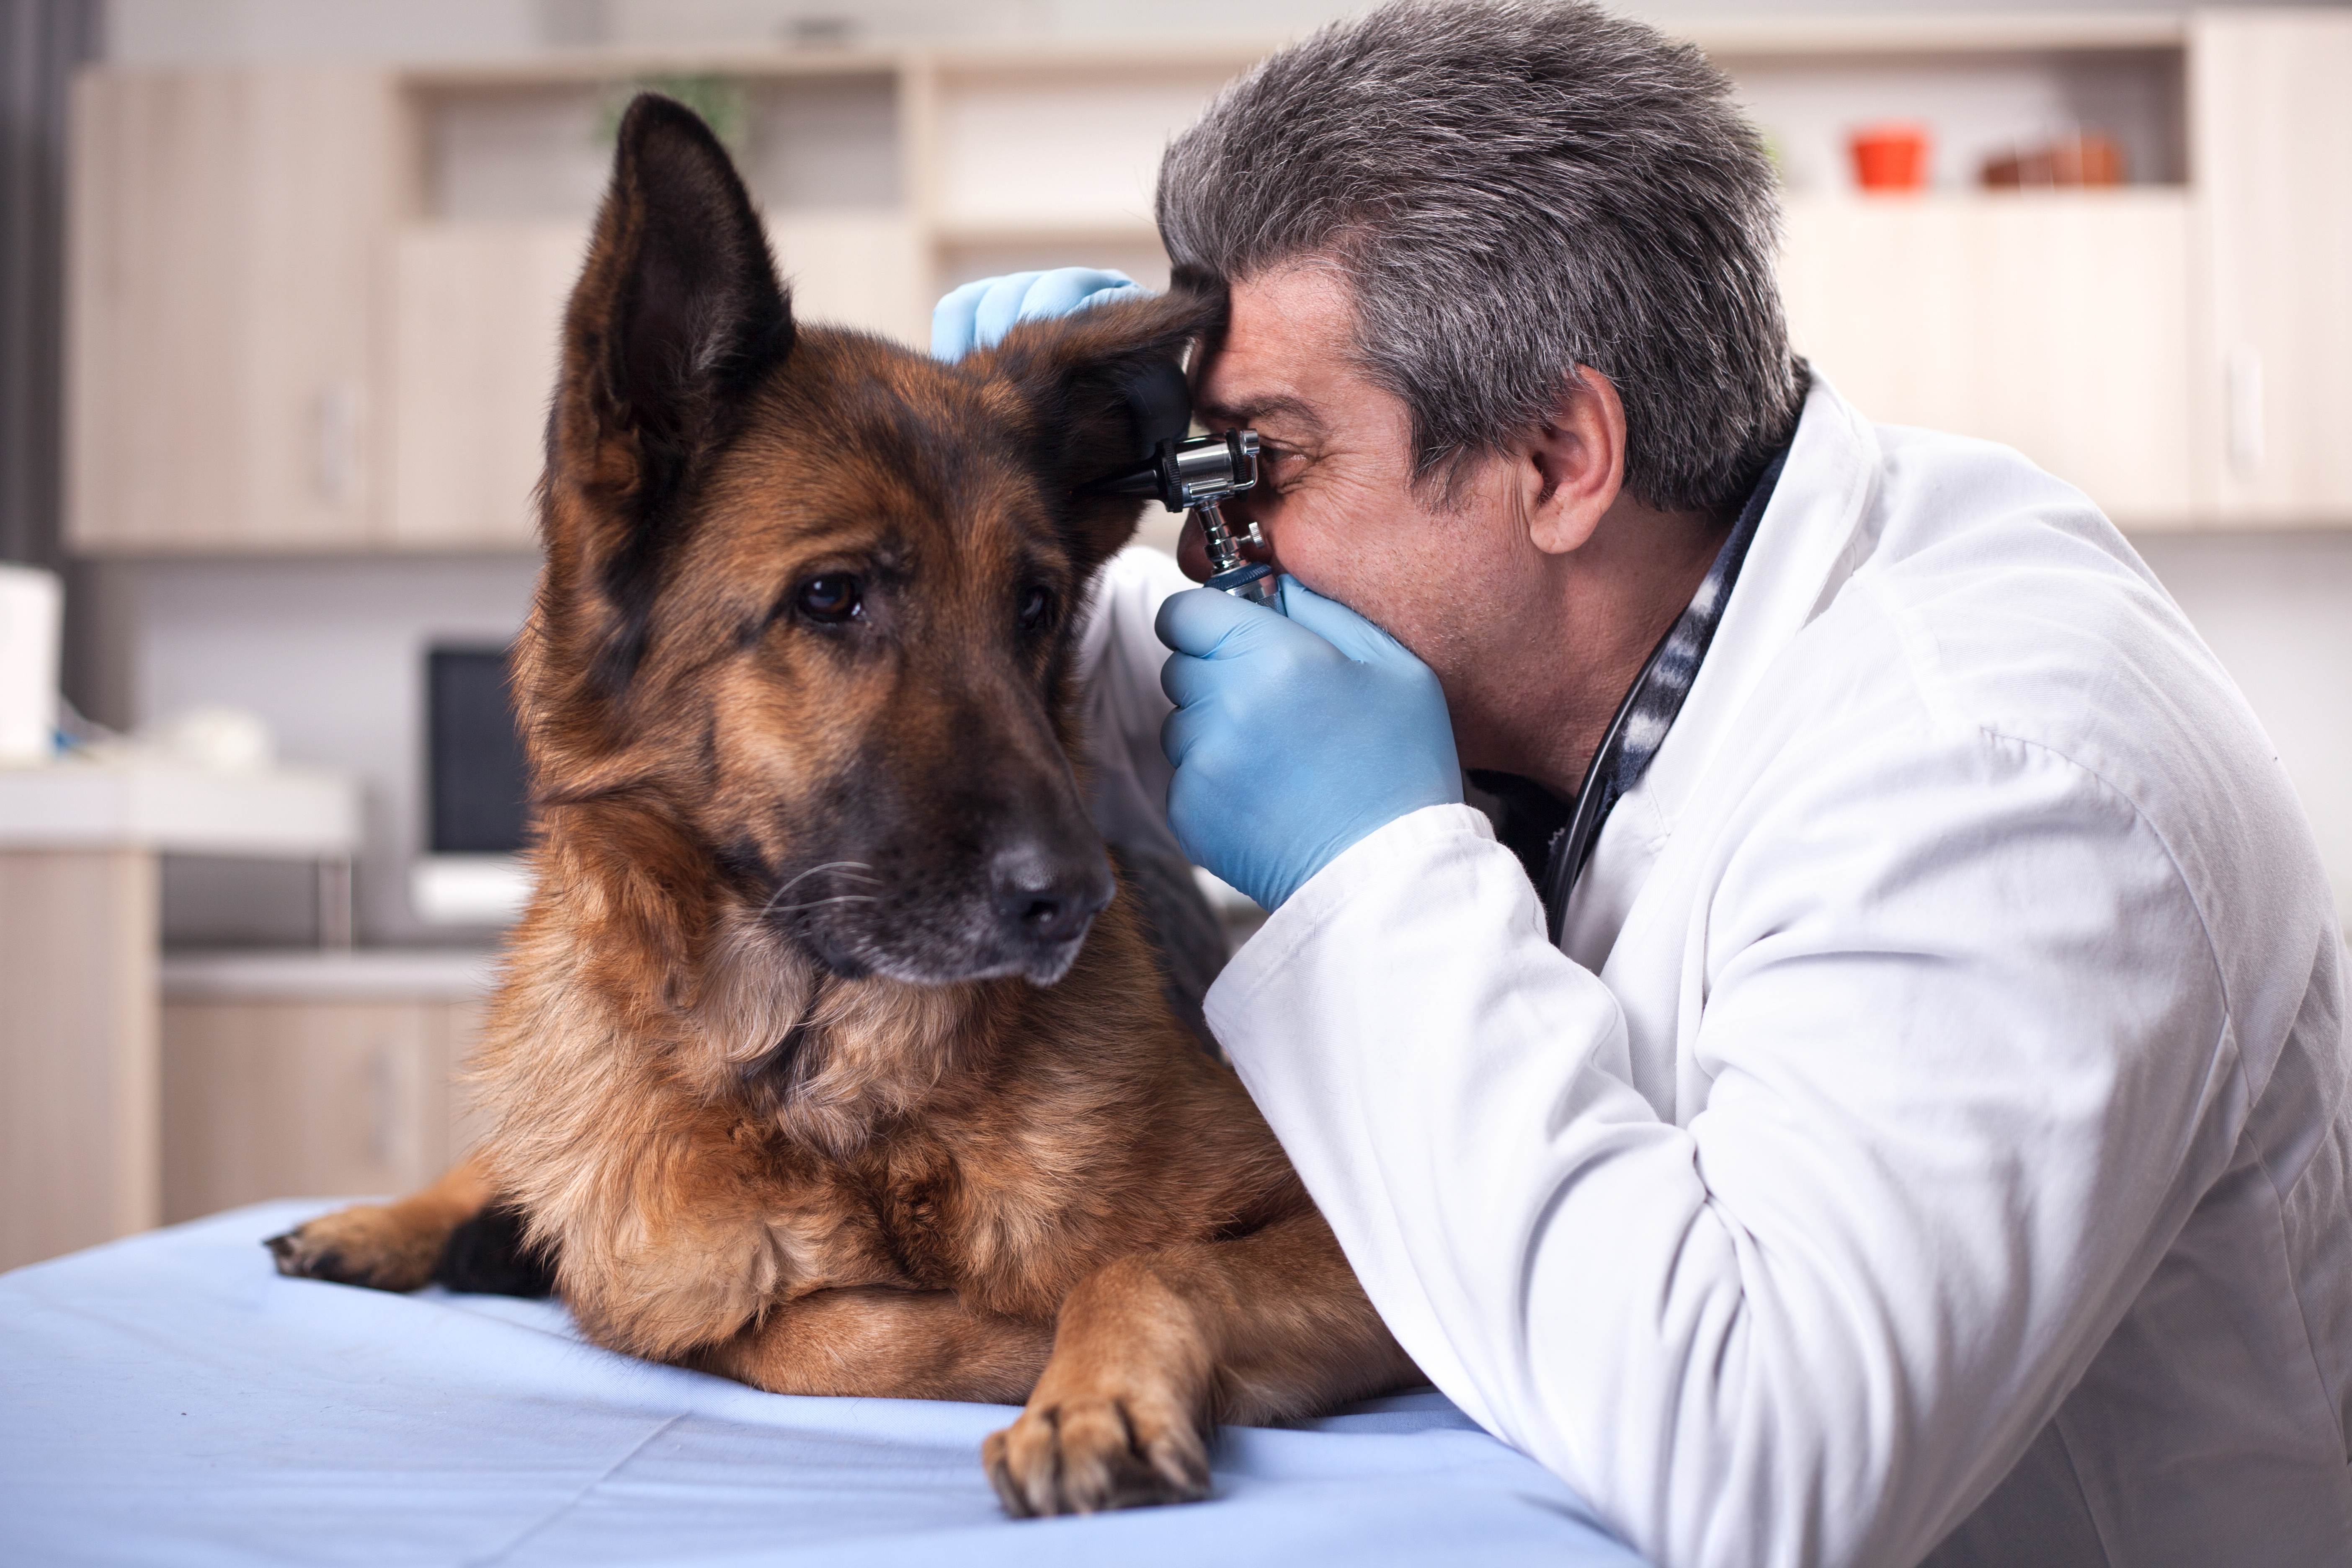 German Shepherd Ear Infections Near Brain: Beware of Wrong Diagnosis